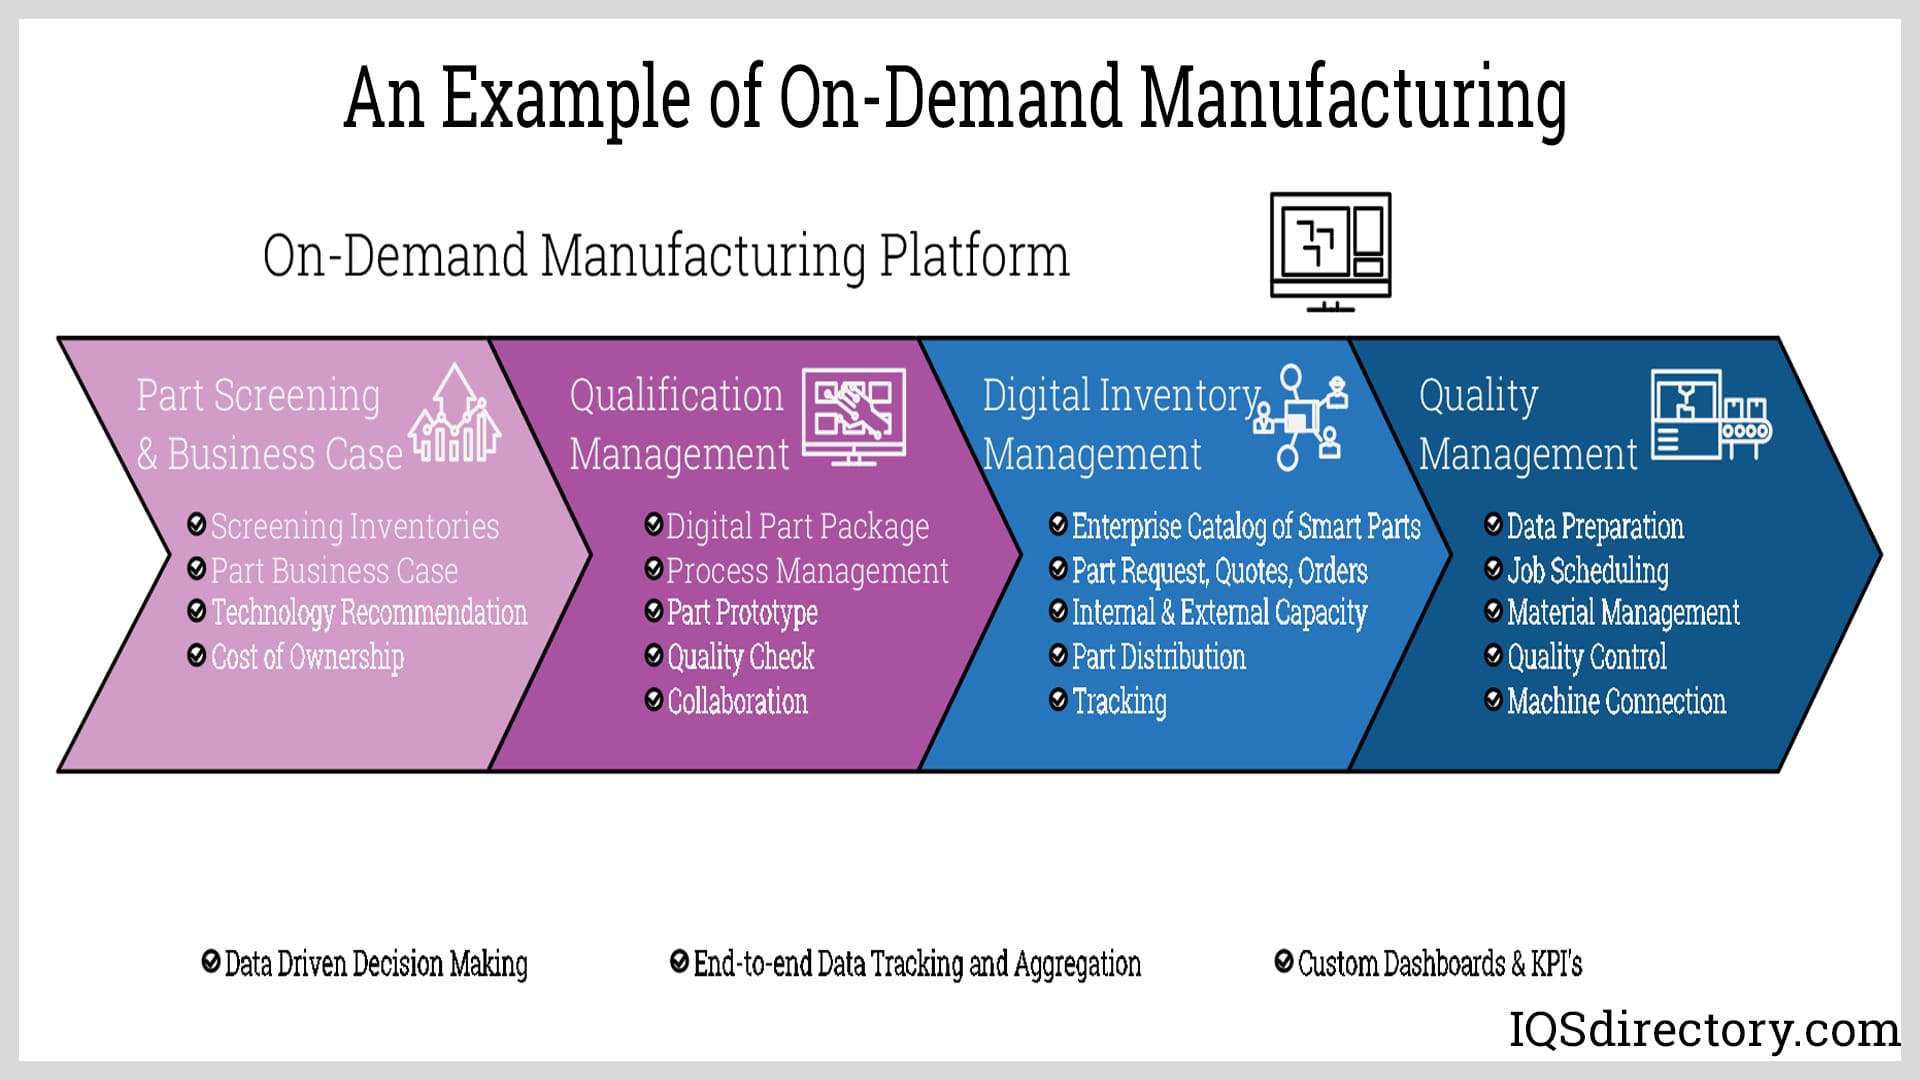 On-Demand Manufacturing Platform